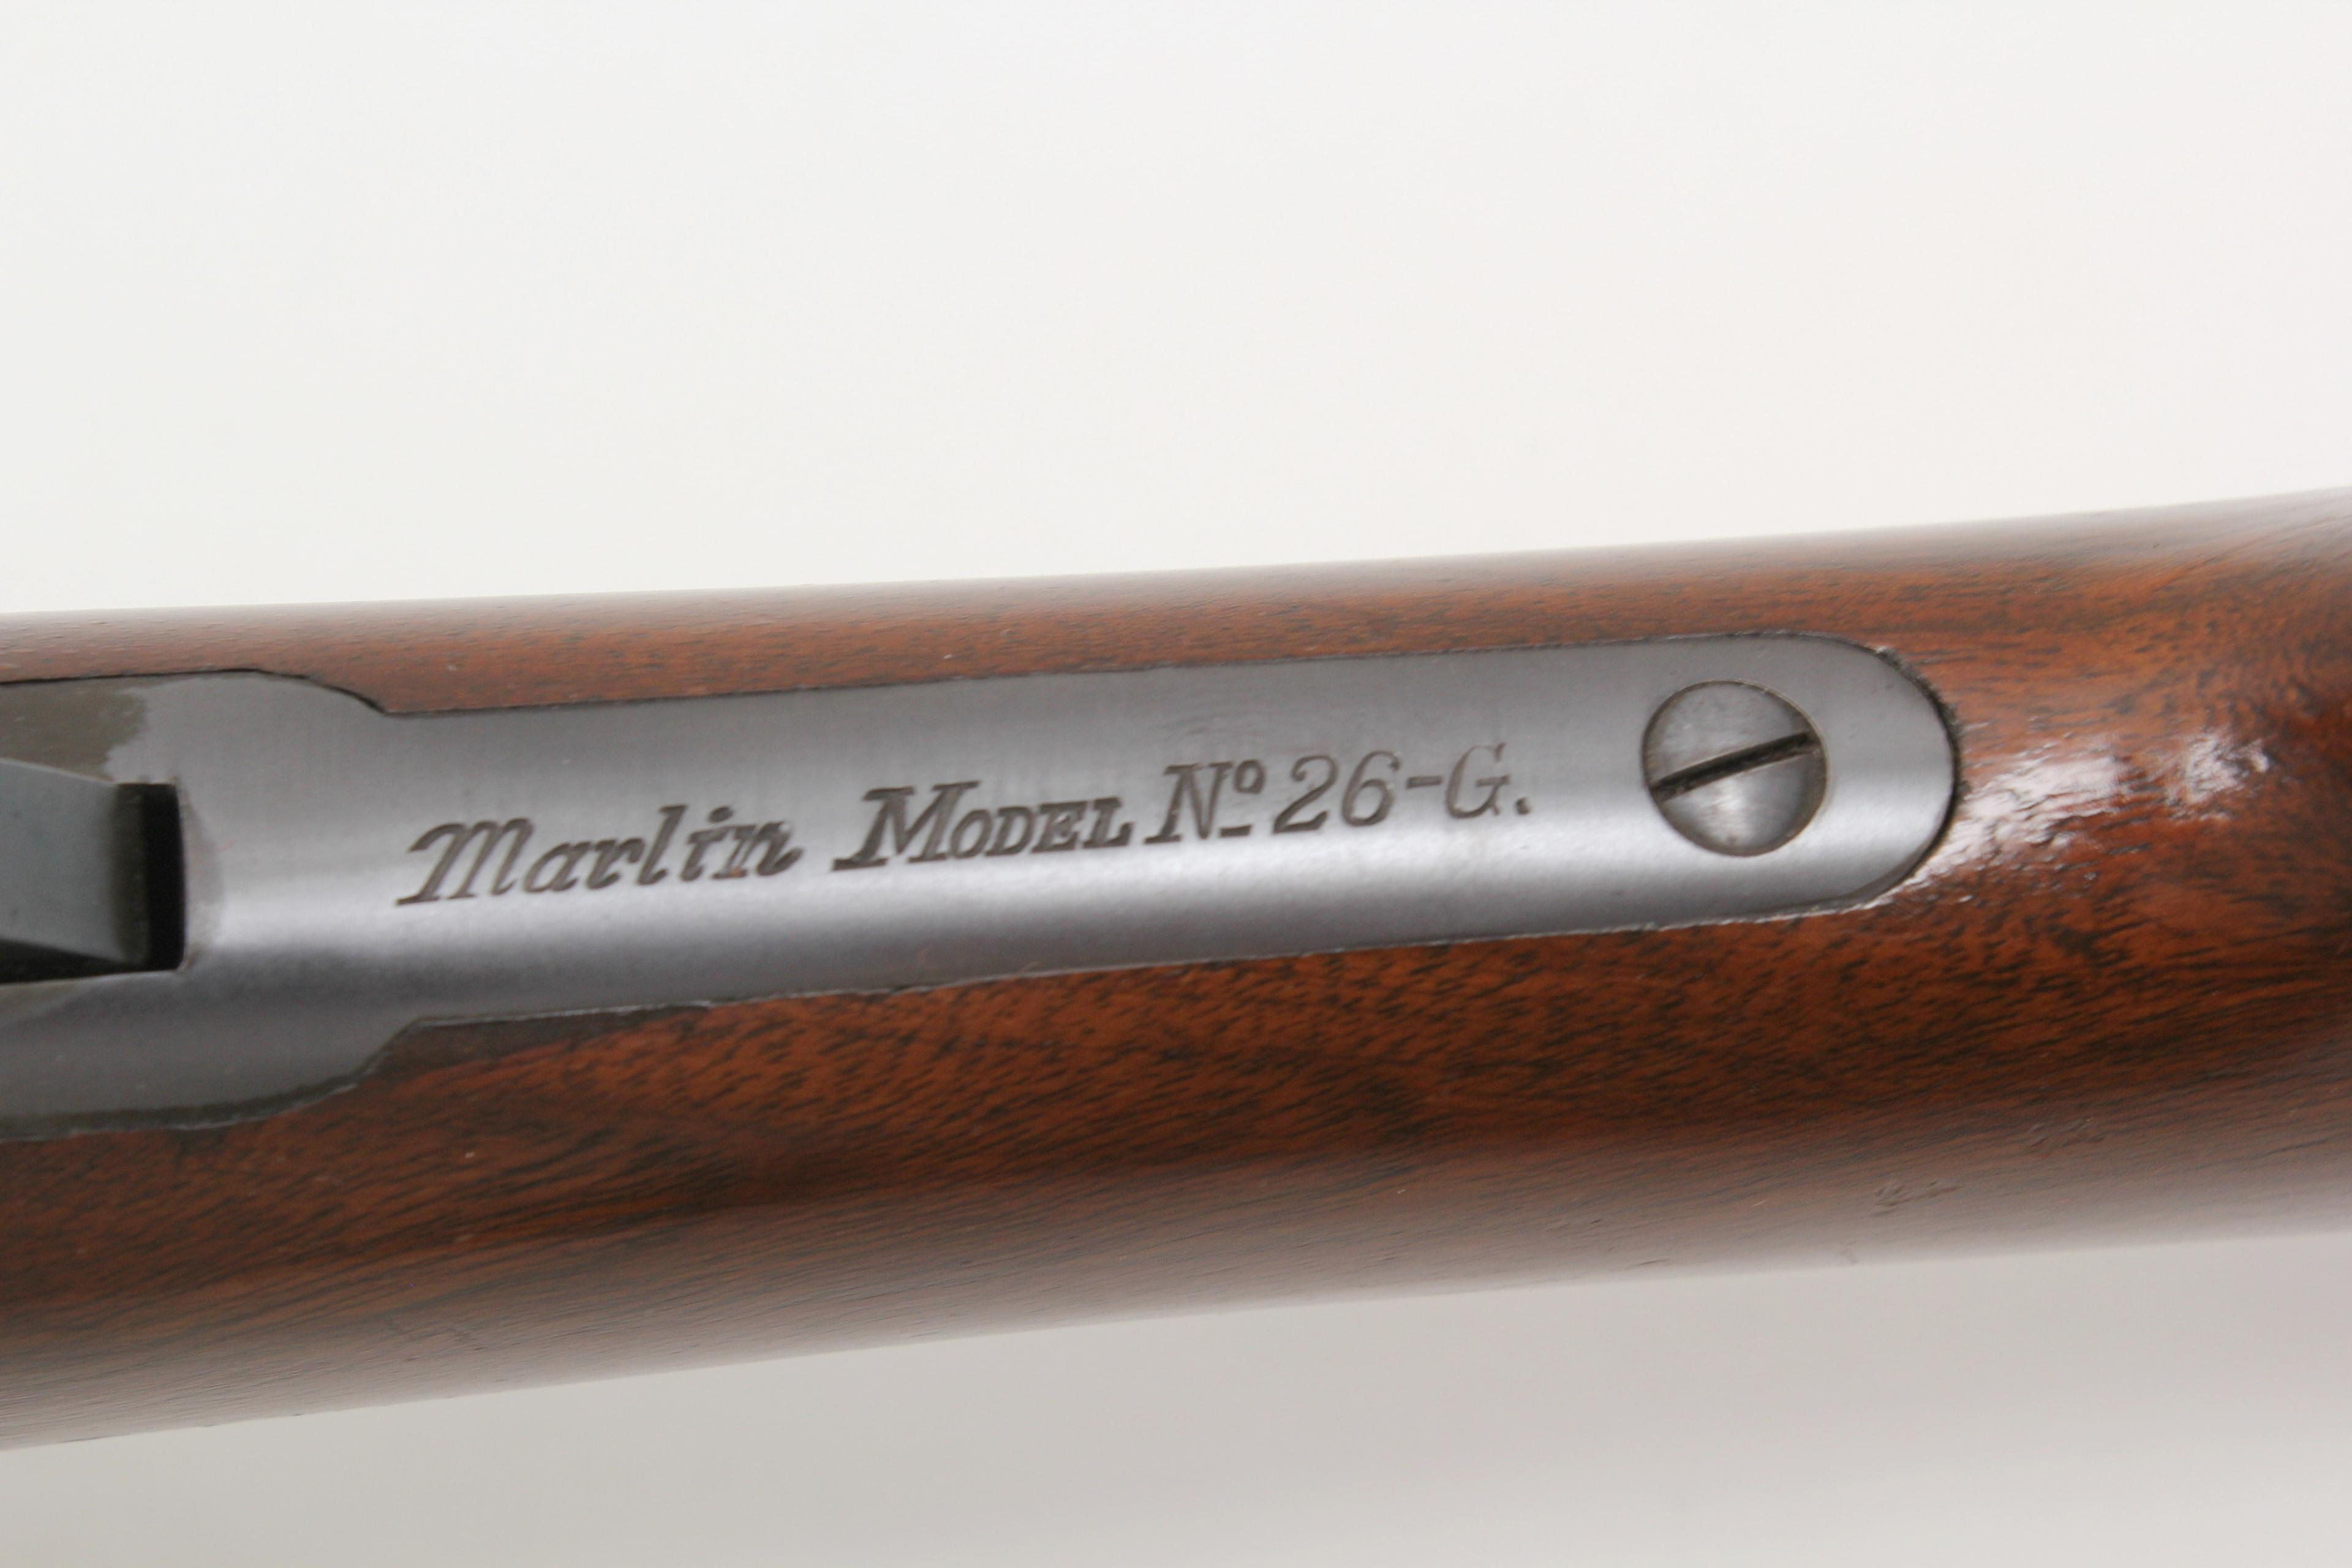 Marlin, Model No. 26-G riot gun, 12 ga, s/n A23445, shotgun, brl length 20"